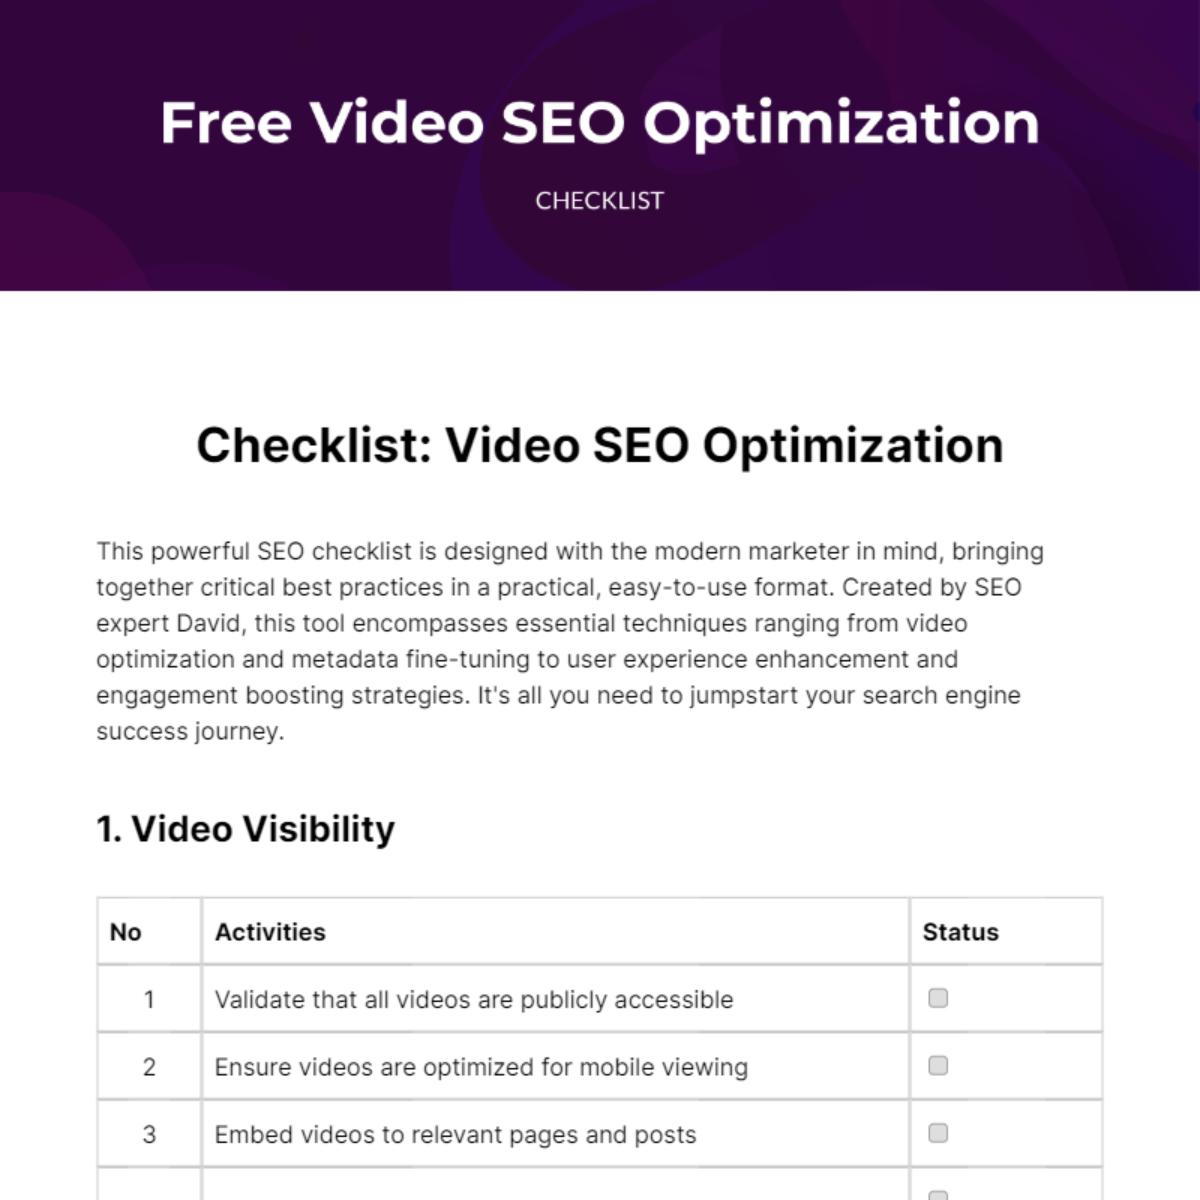 Free Video SEO Optimization Checklist Template